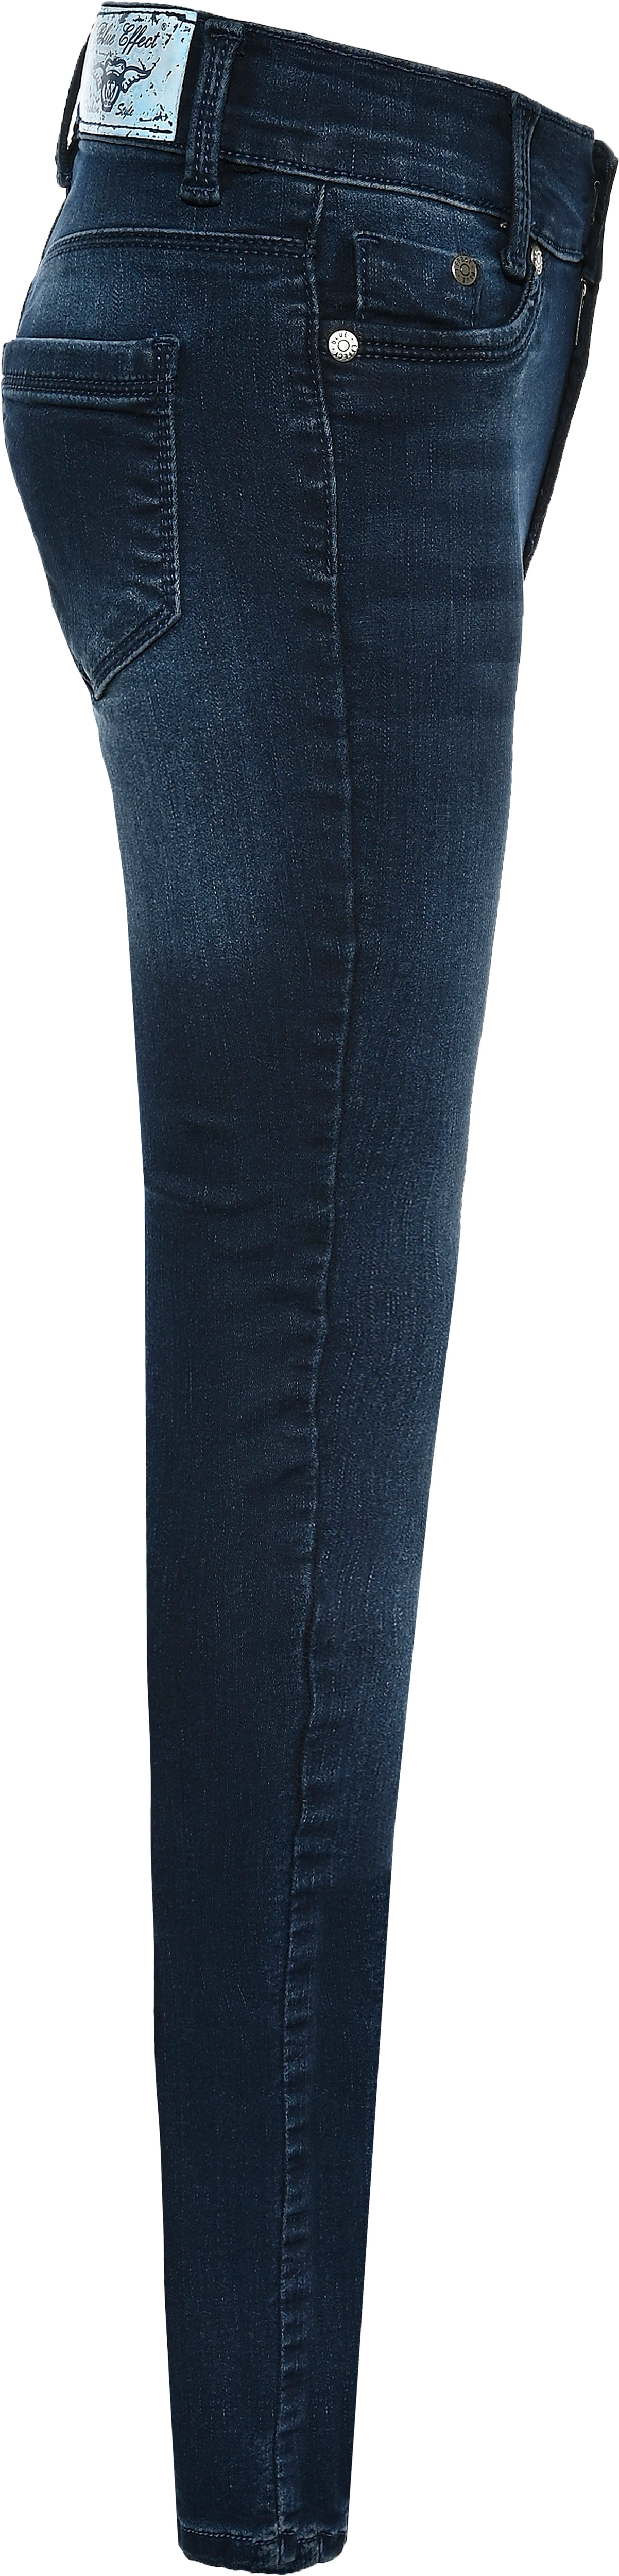 1167-NOS Girls High-Waist Jean Ultrastretch, Skinny, verfügbar in Slim,Normal